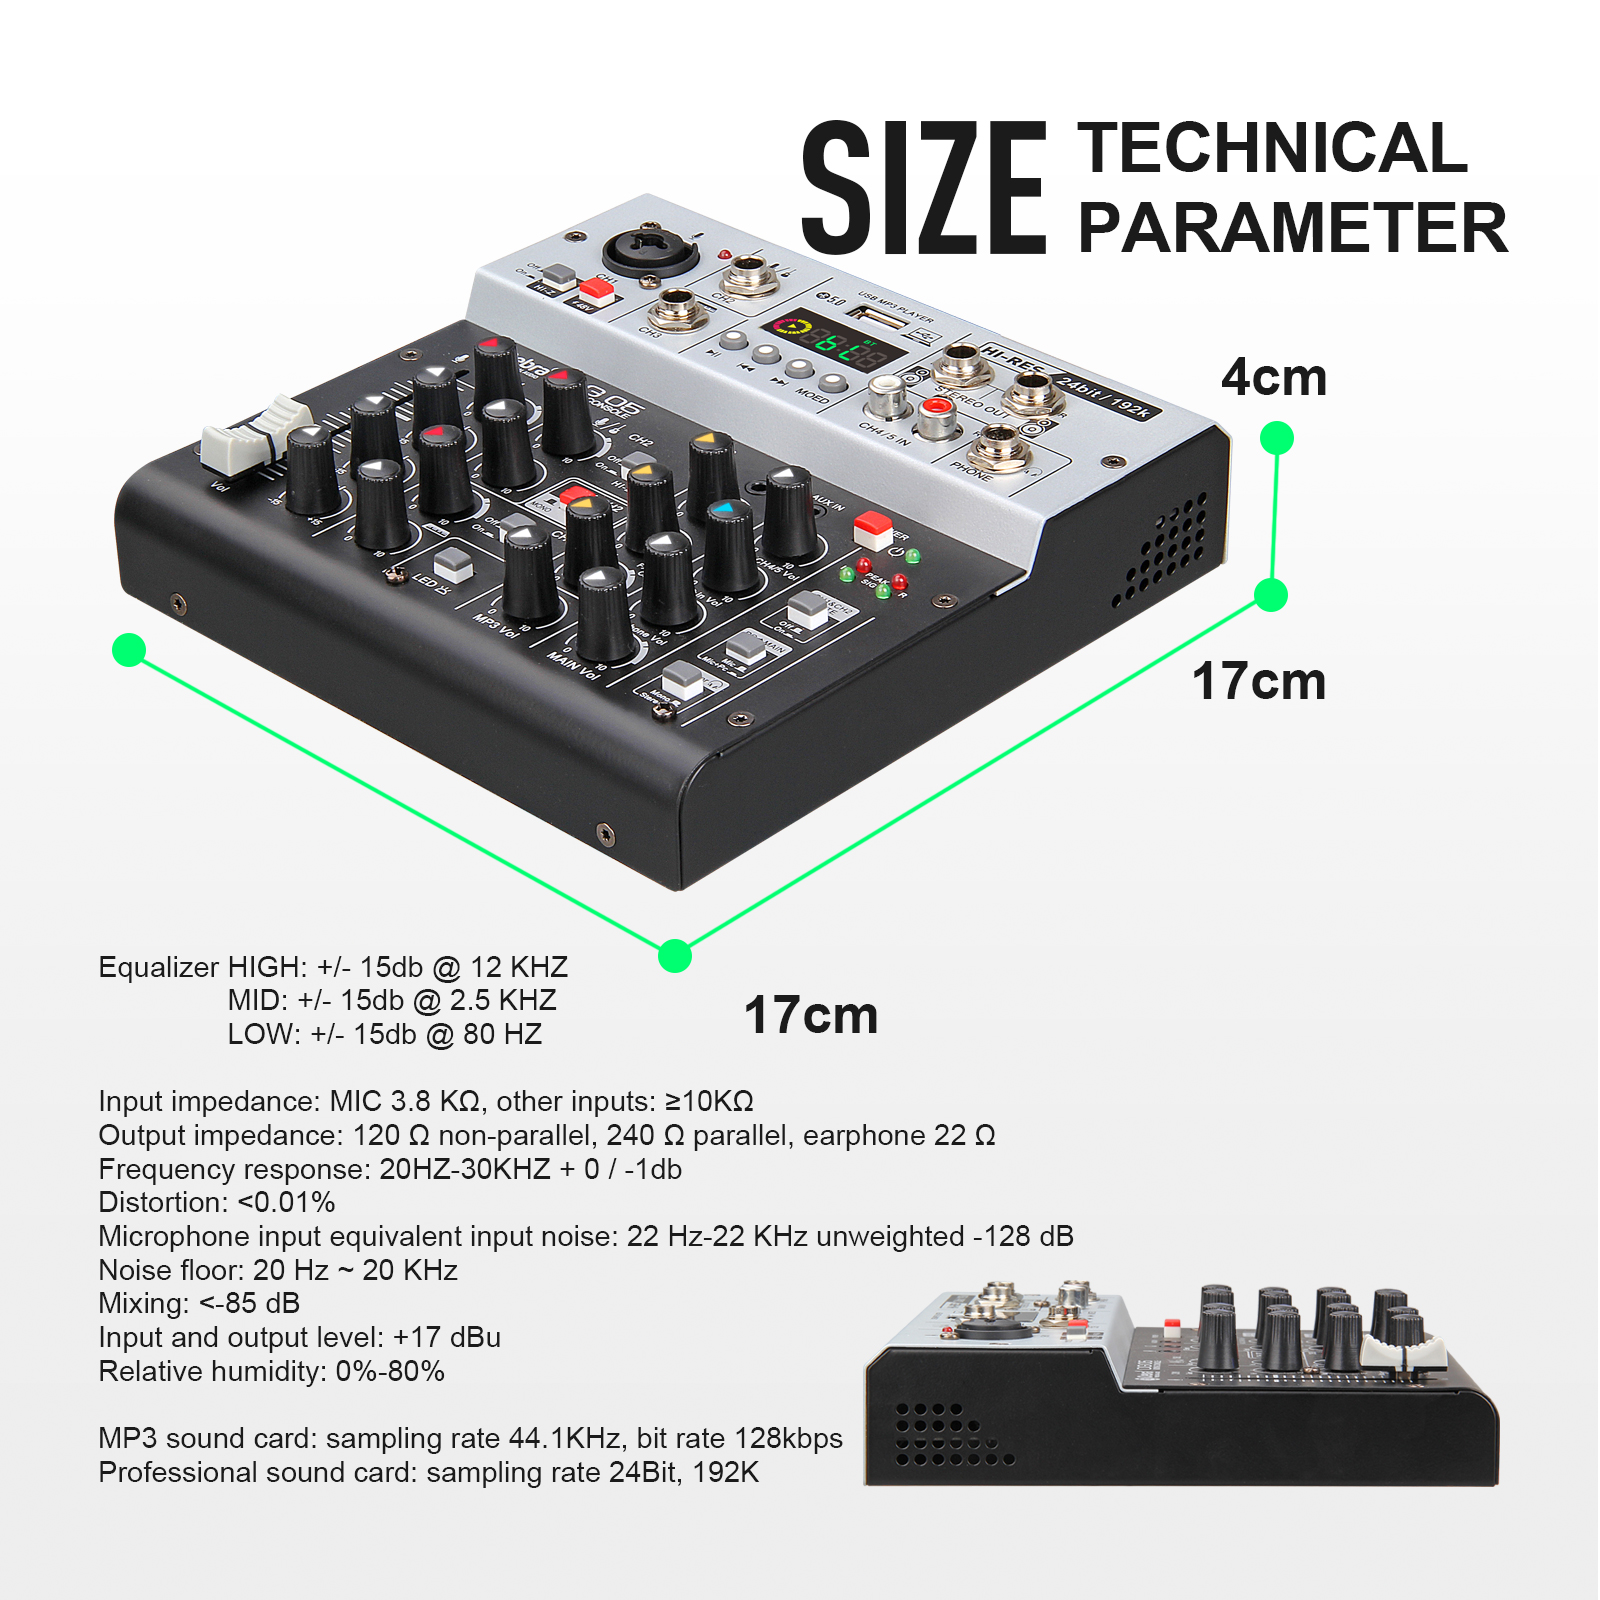 DG05 24bit 192K Professional recording sound card audio interface mixer